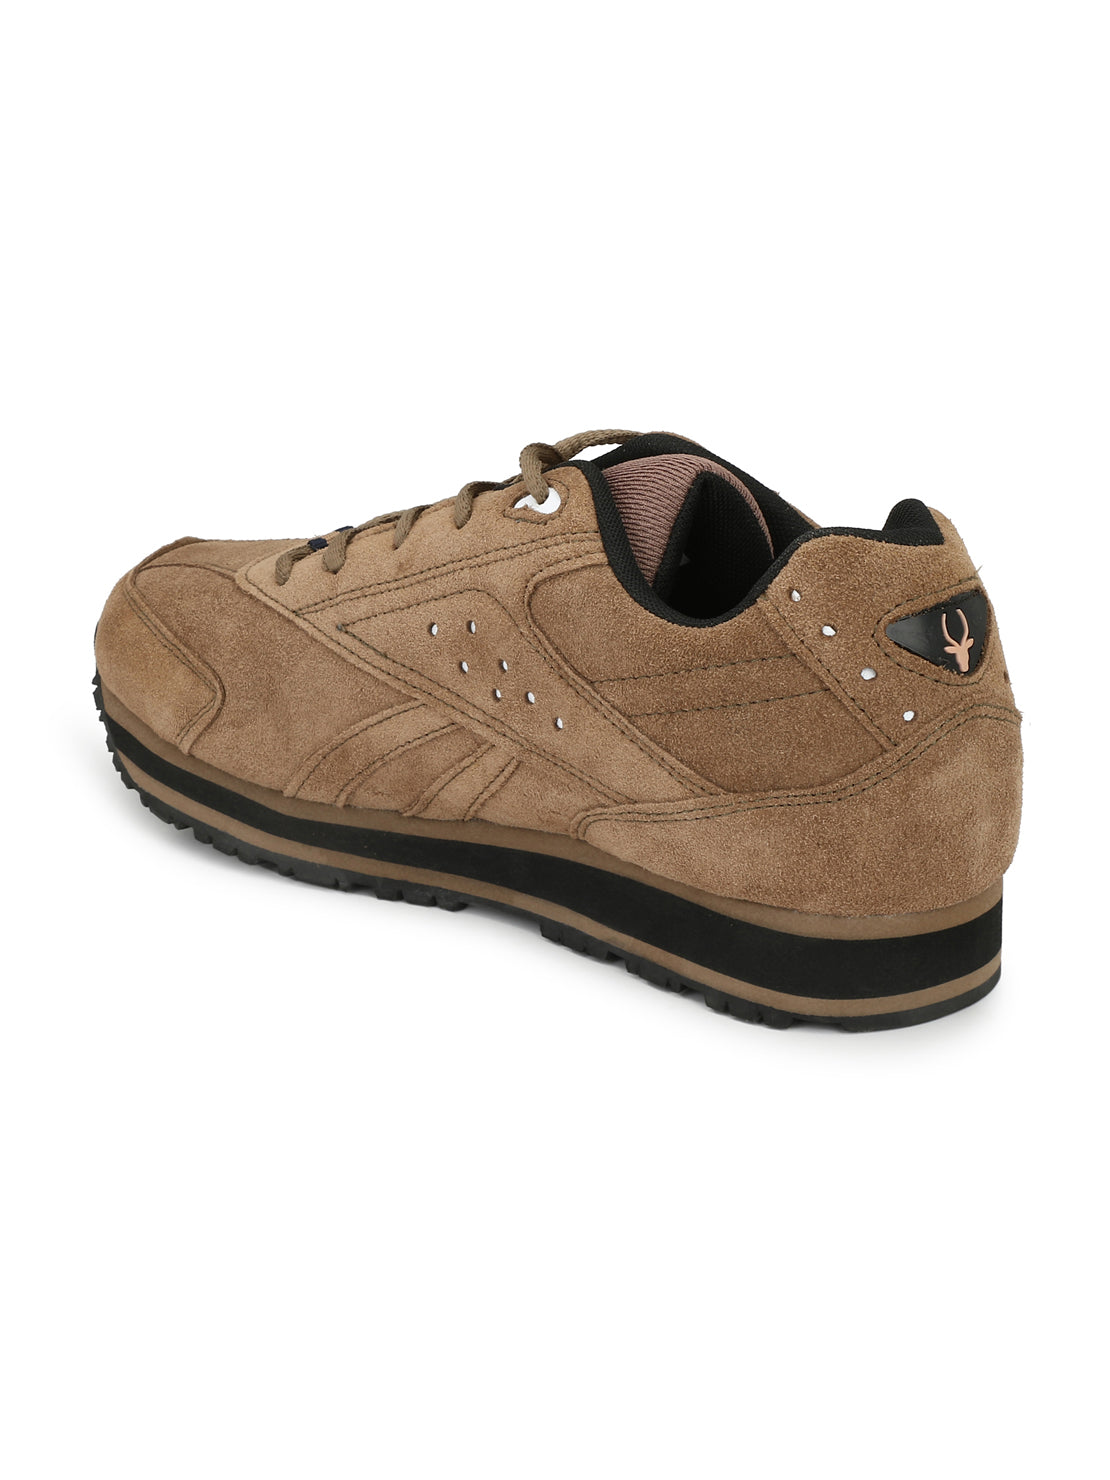 Hirolas® Men's Camel Multisports Leather Lace Up Sneaker Sport Shoes (HRL1911CHK)